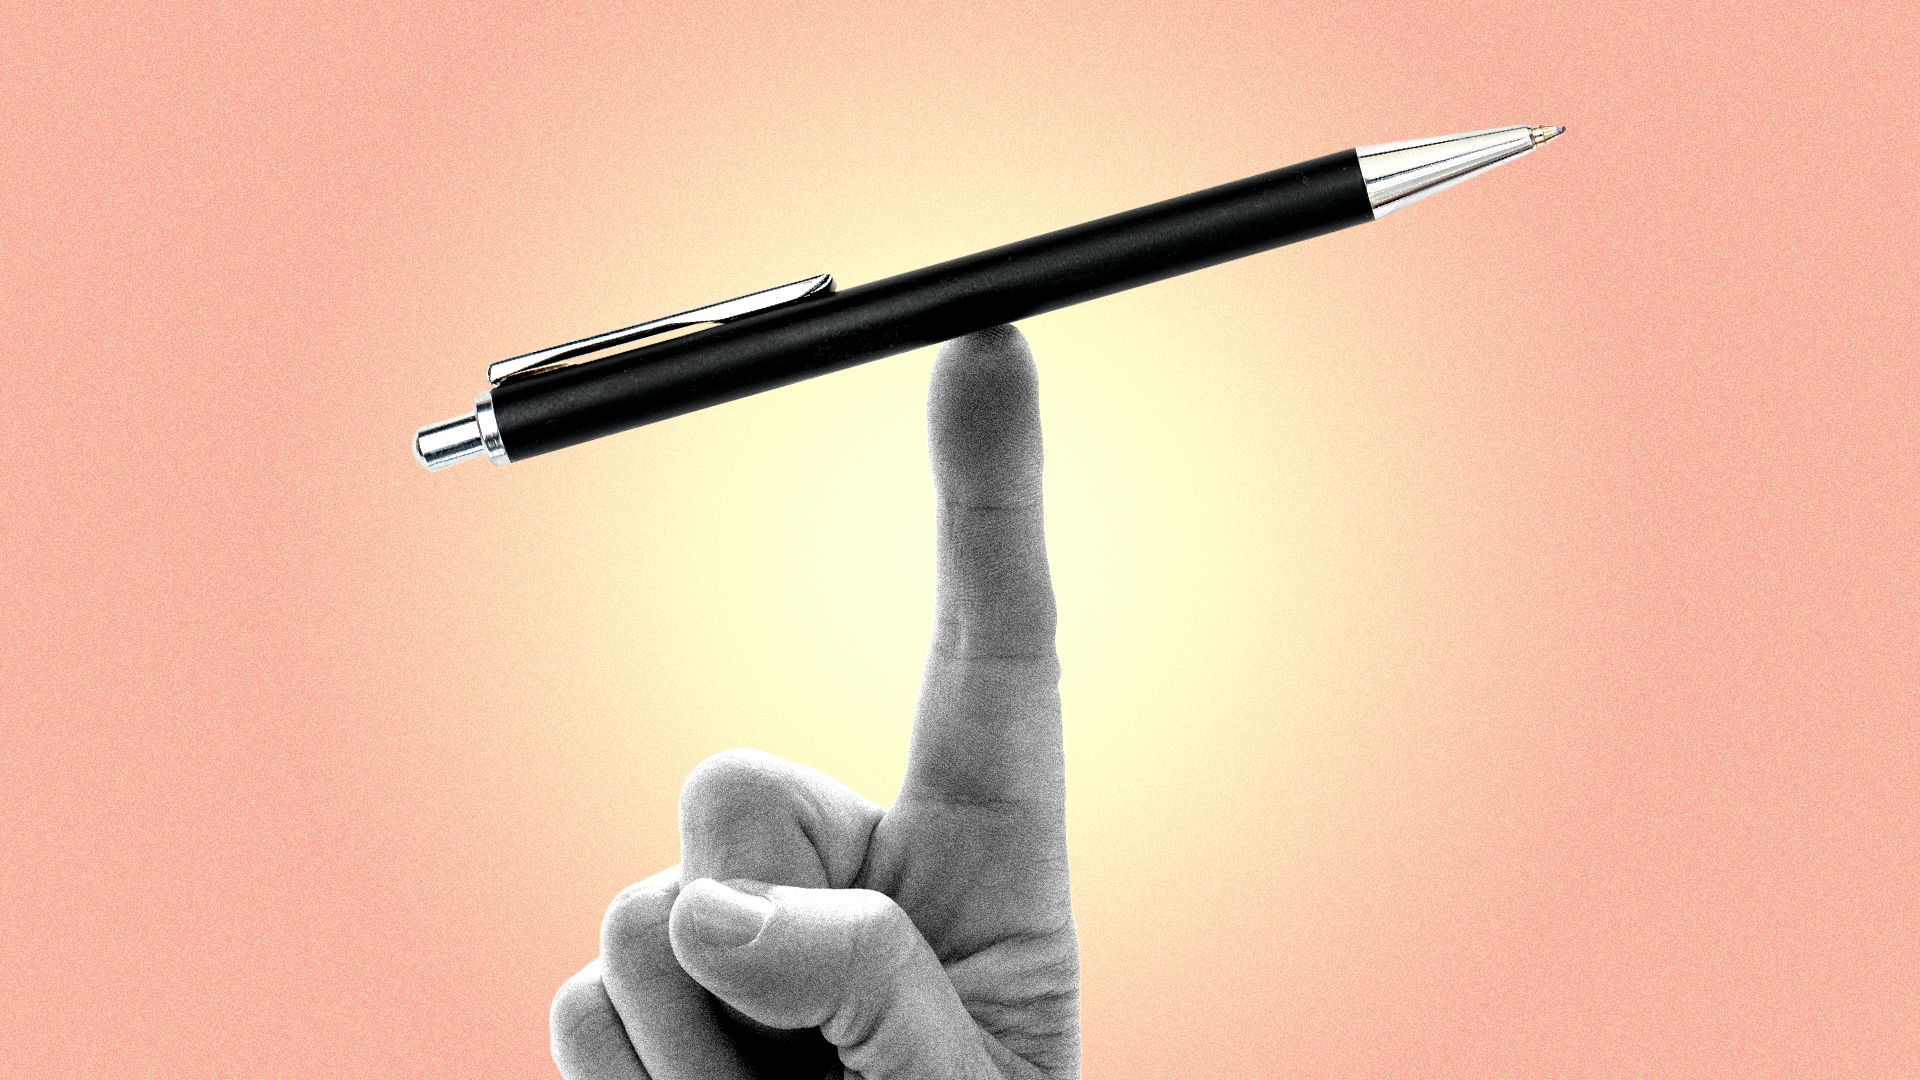 Illustration of a finger pointed upwards, balancing a pen